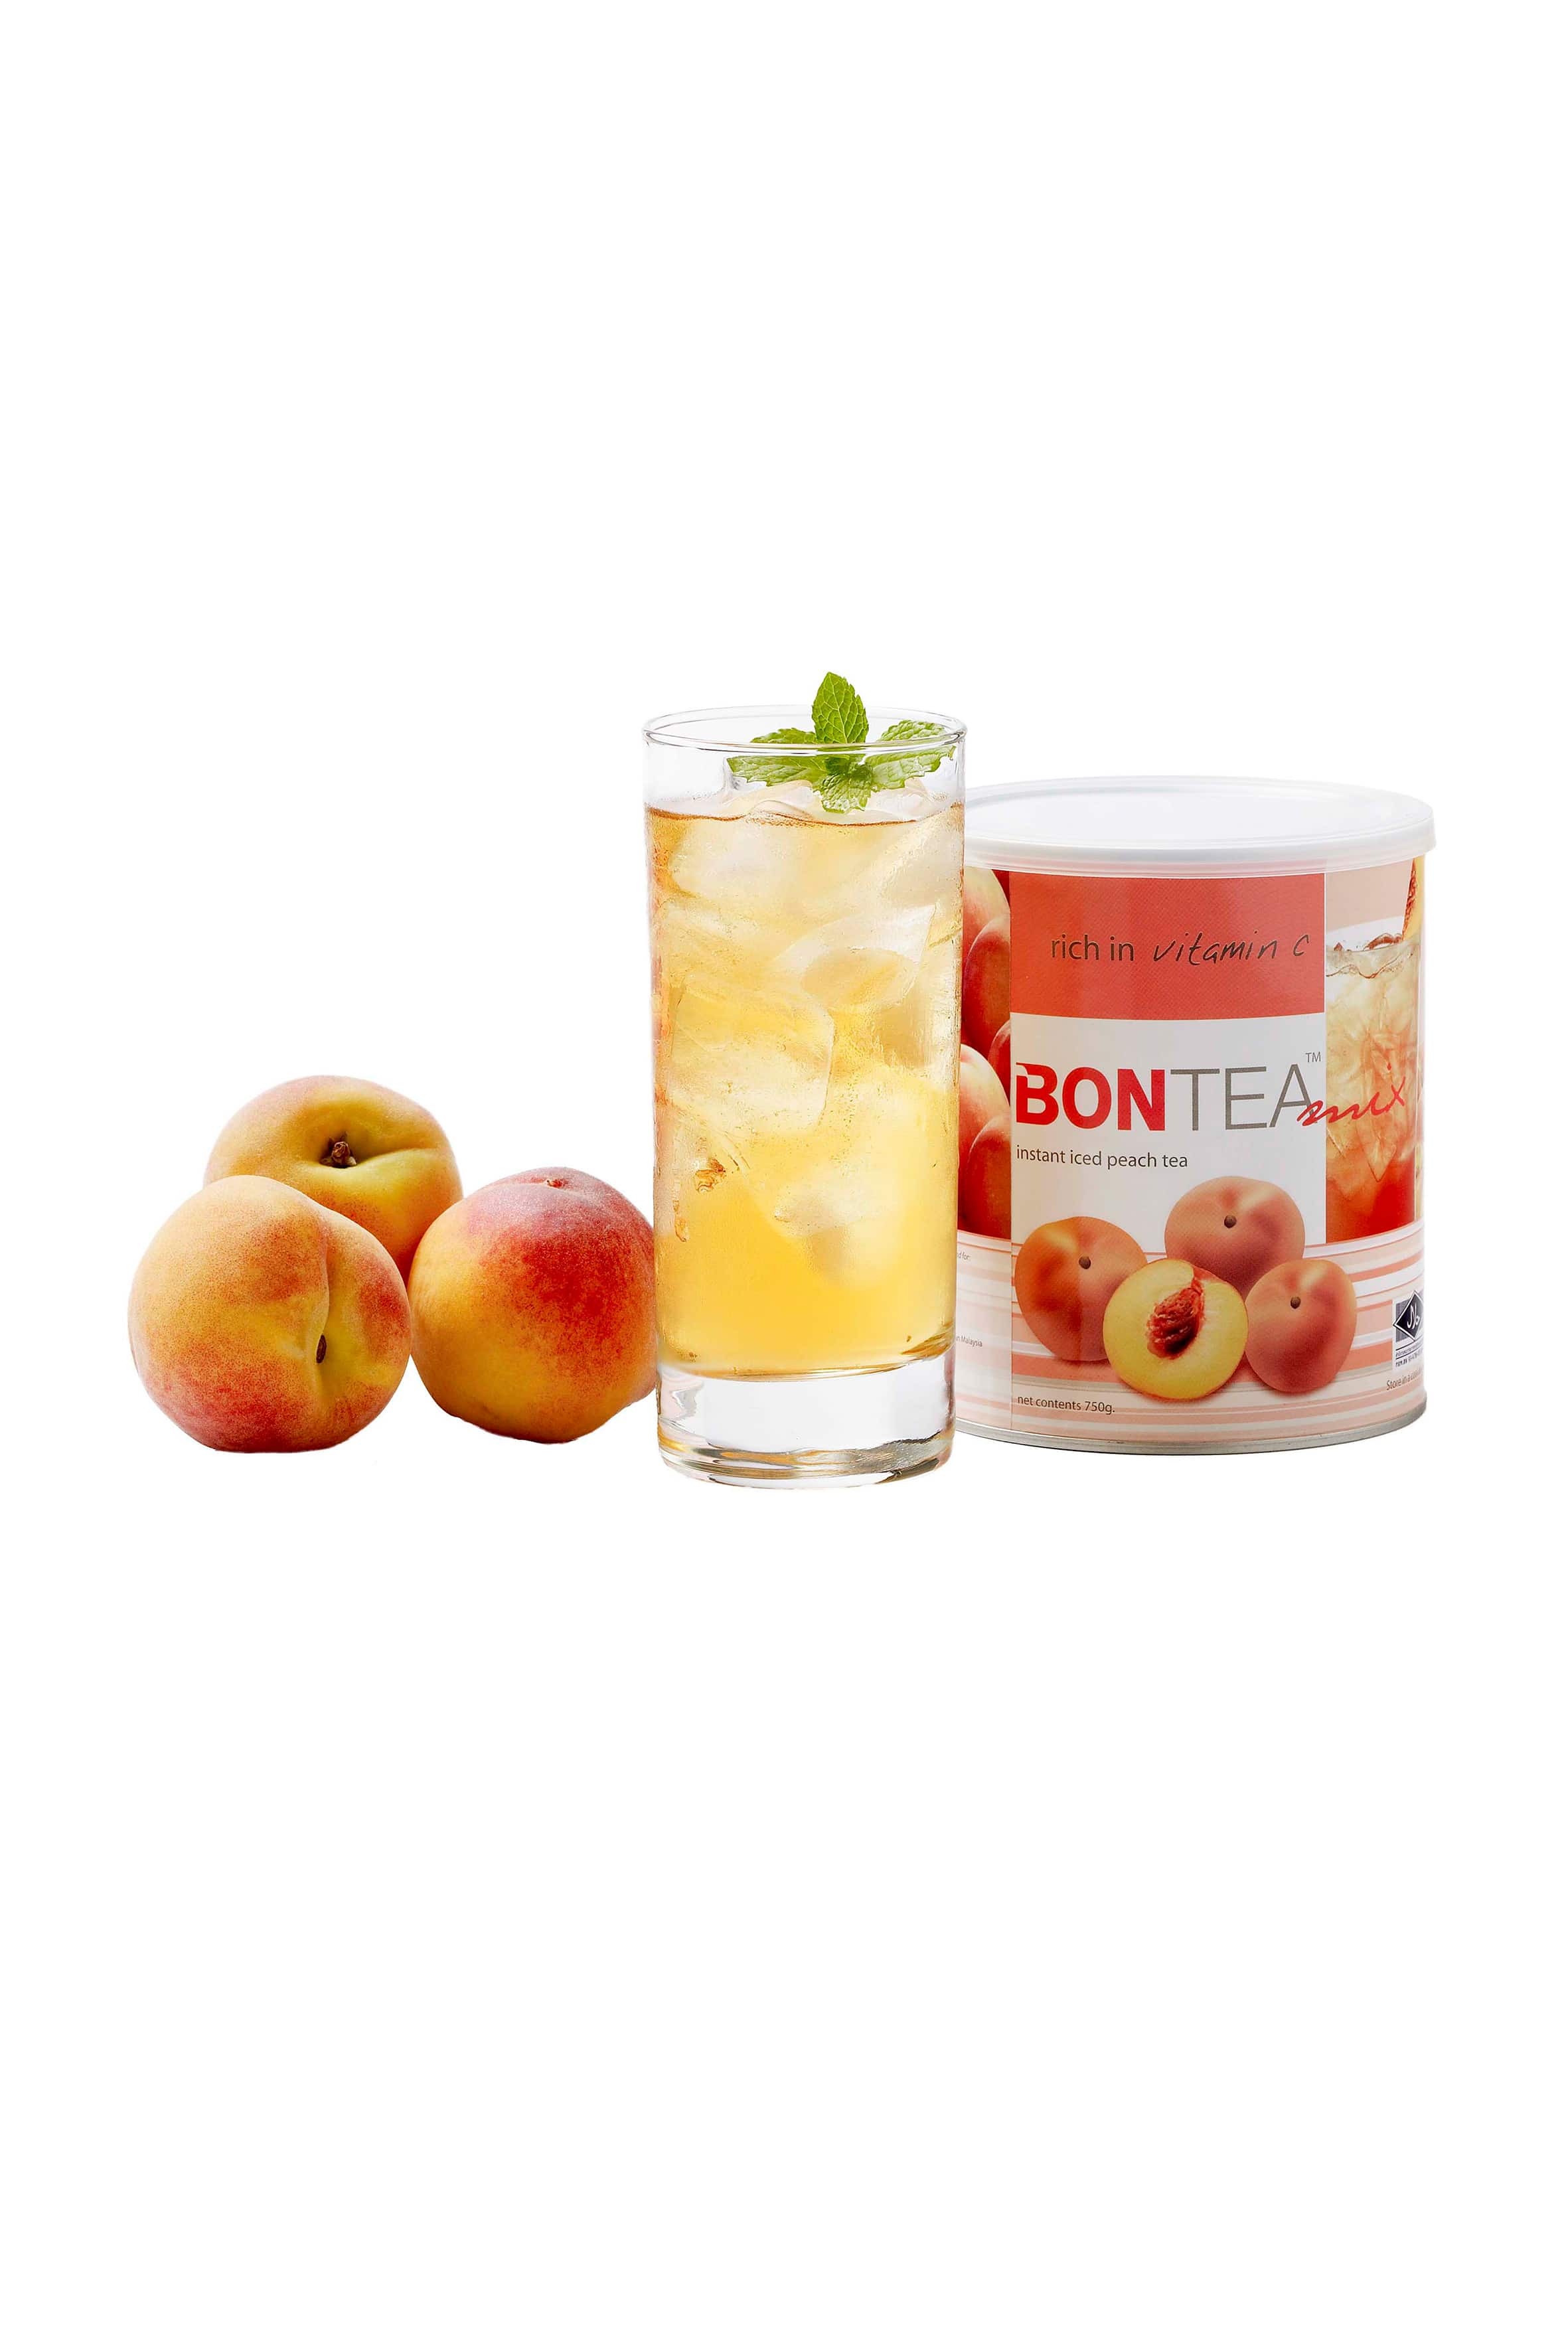 Bontea Mix Instant Iced Peach Flavoured Tea